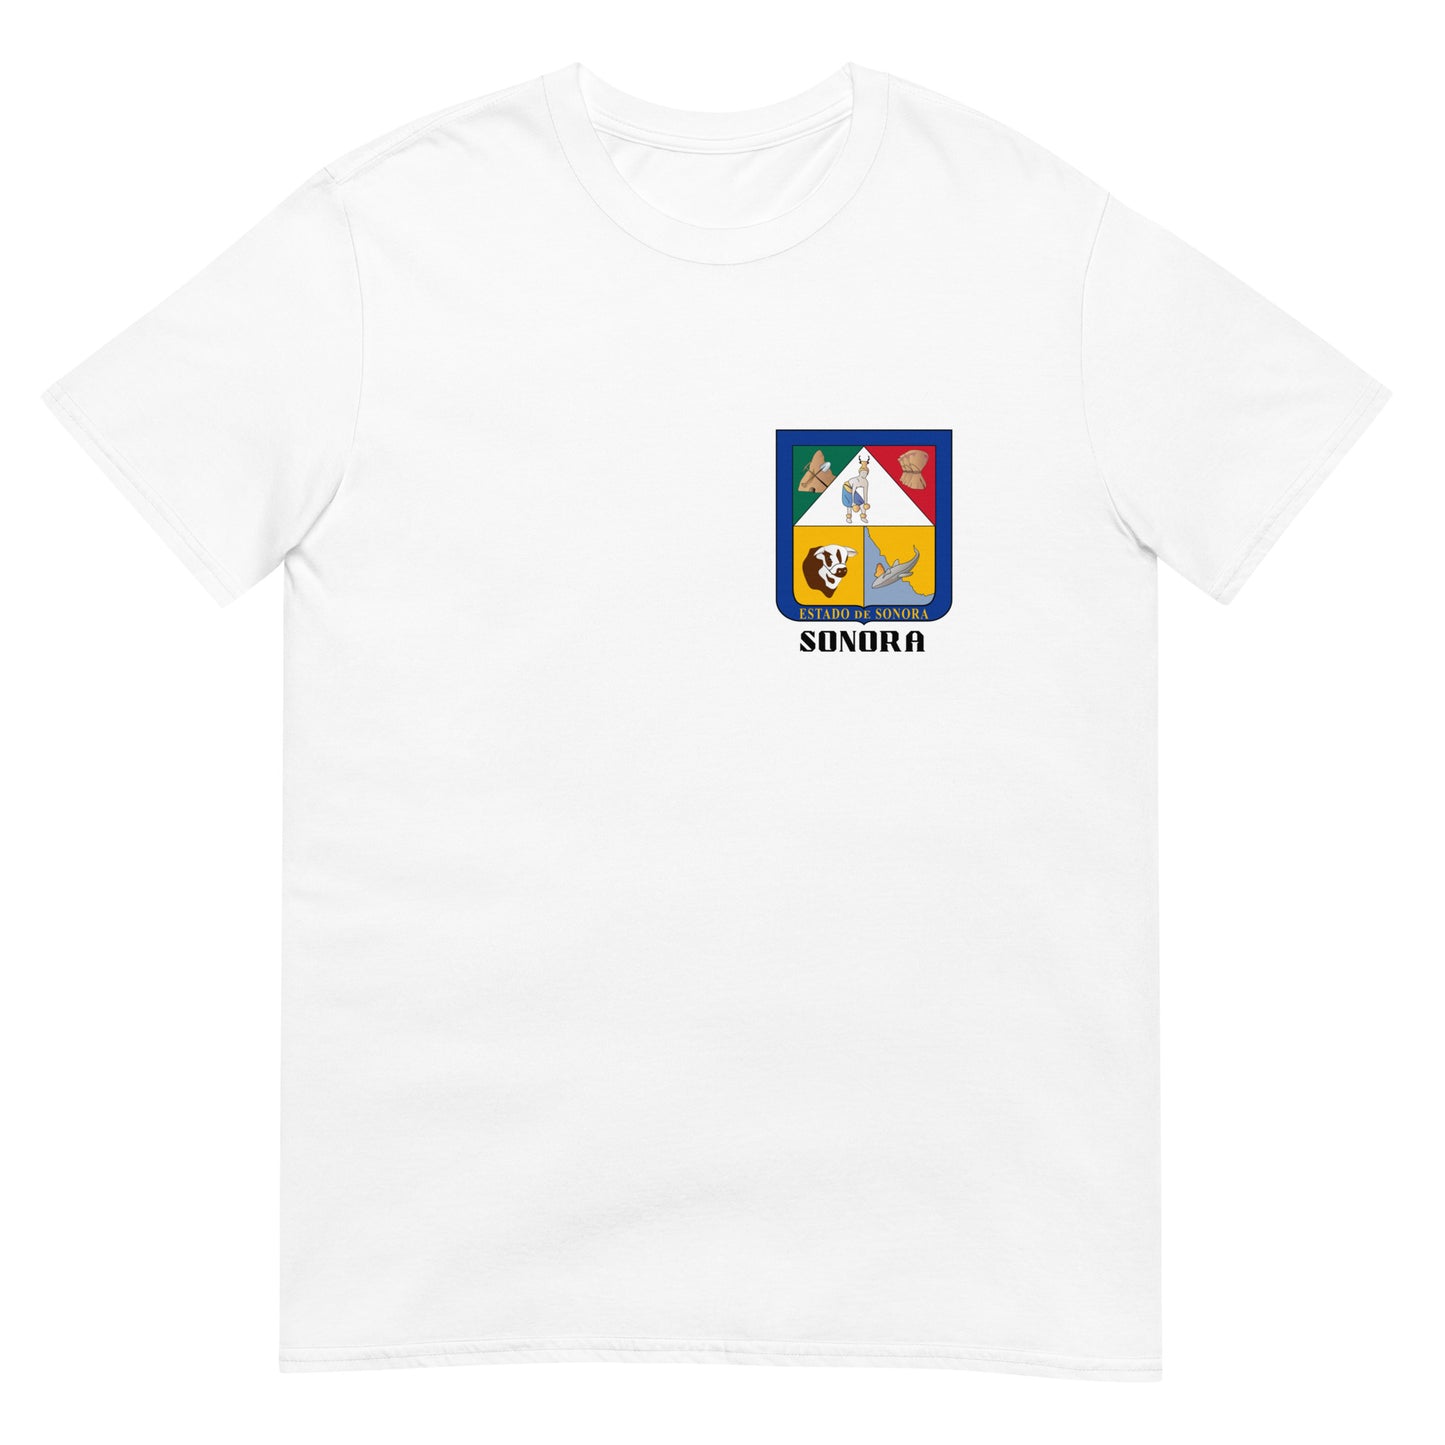 Sonora- T-Shirt